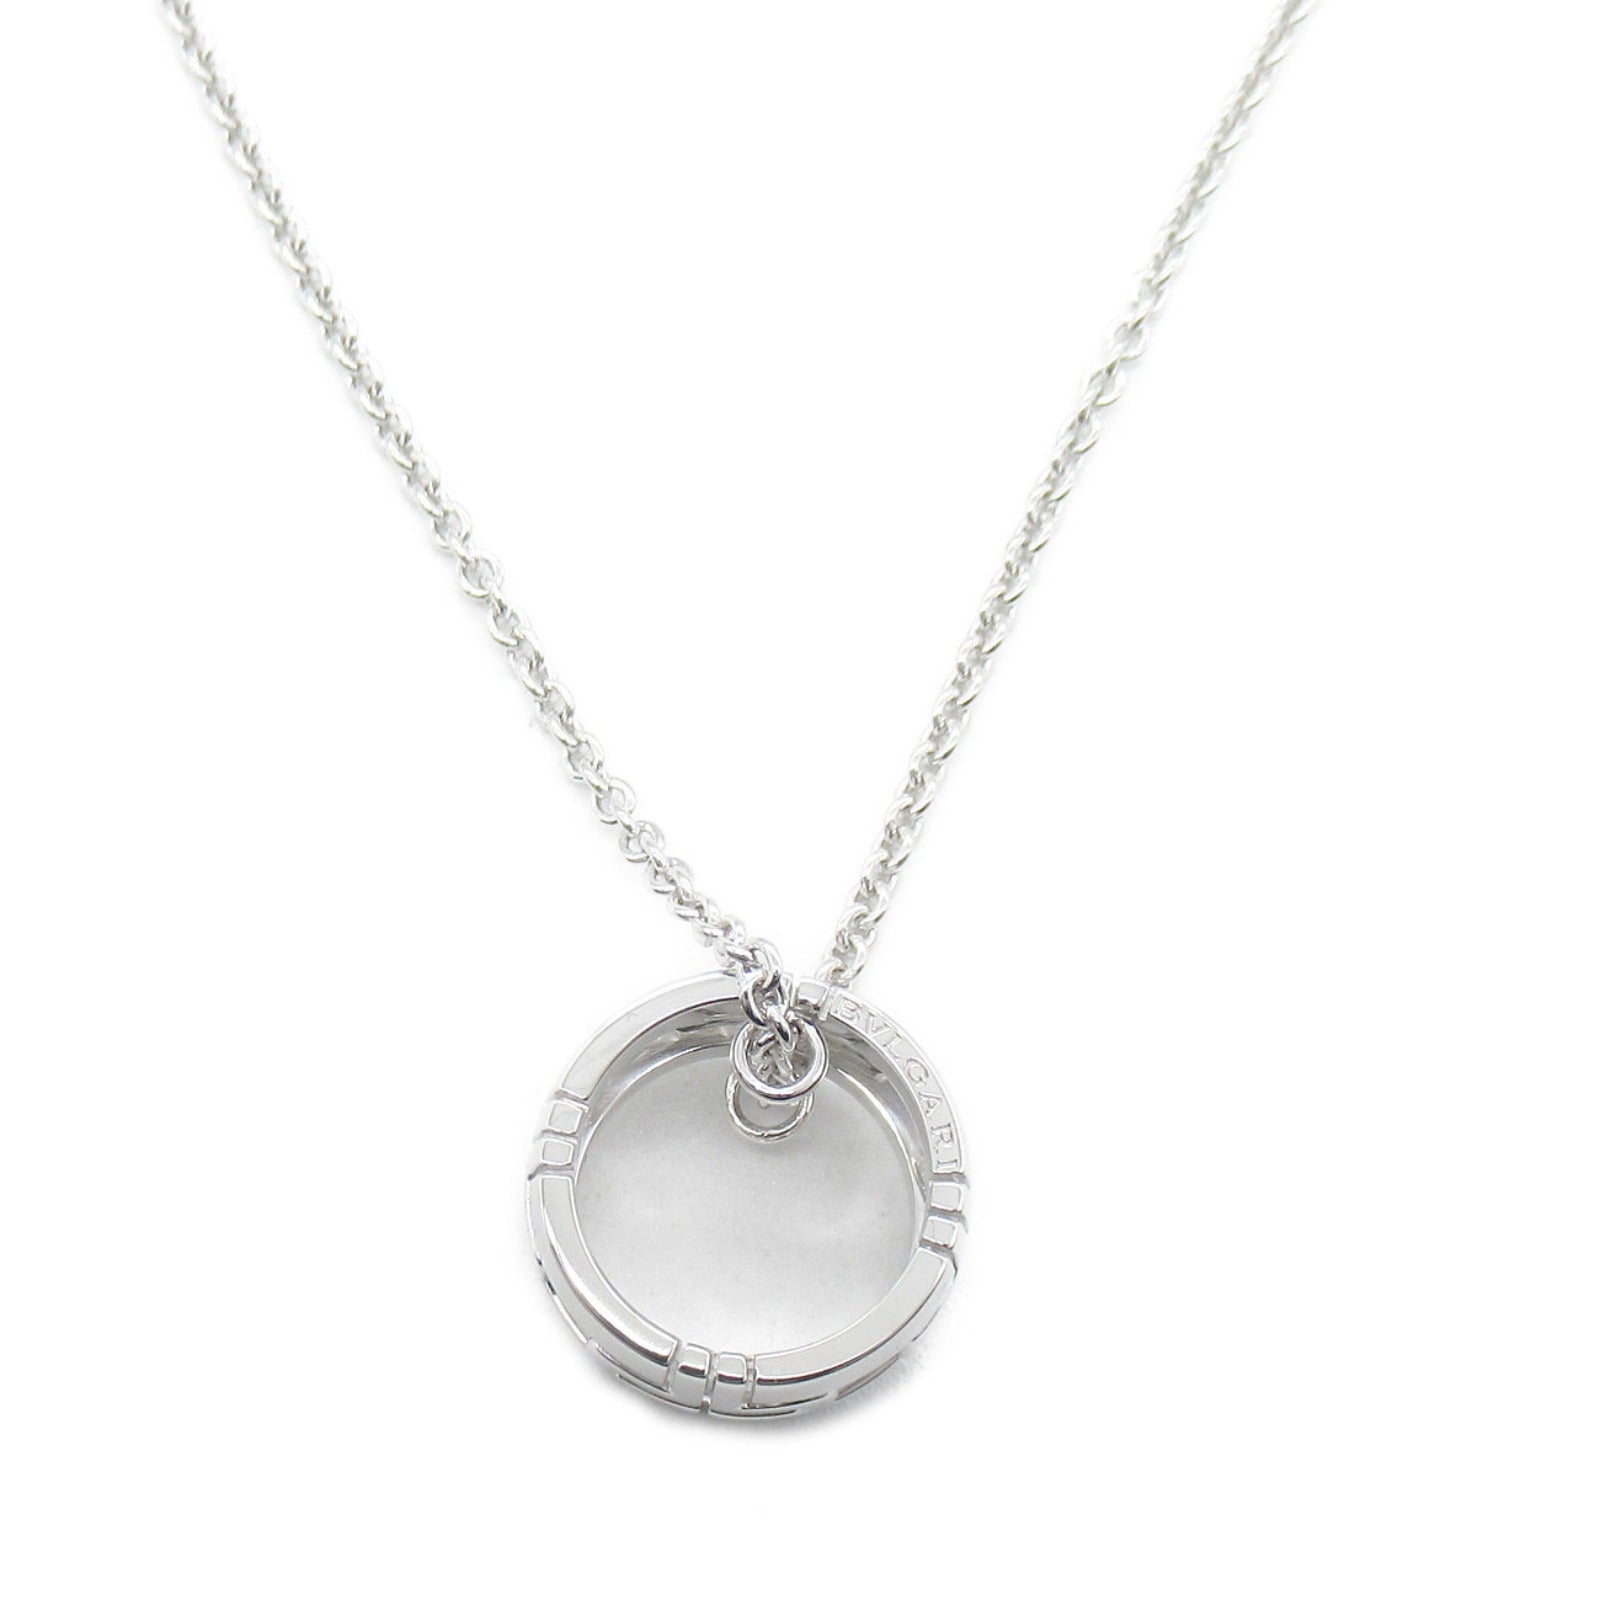 Bulgari BVLGARI Palentine necklace necklace jewelry K18WG (White G)   Silver